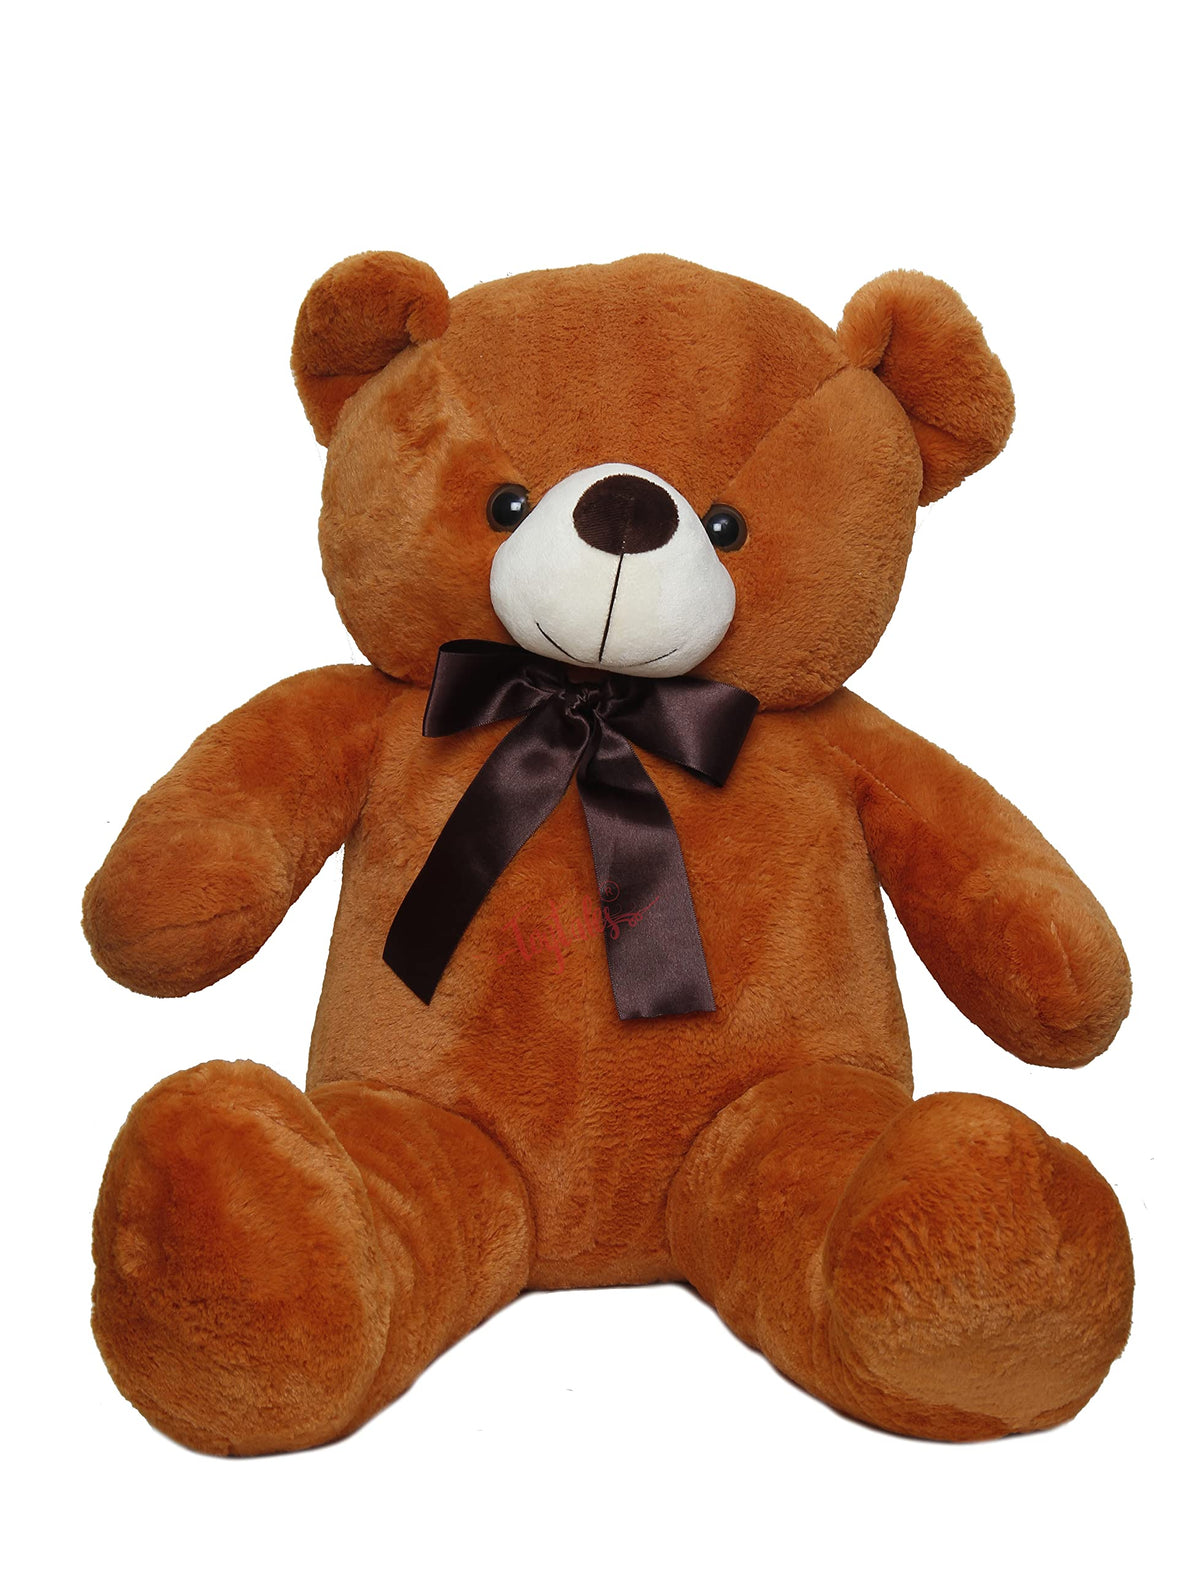 Stuffed Wolly Giant Teddy Bear (95 Cm) Cute Sitting Plush Soft Toy for Girls & Boys | Stuffed Animal Soft Toy for Kids | Cute Plush HuggableToy (Brown)